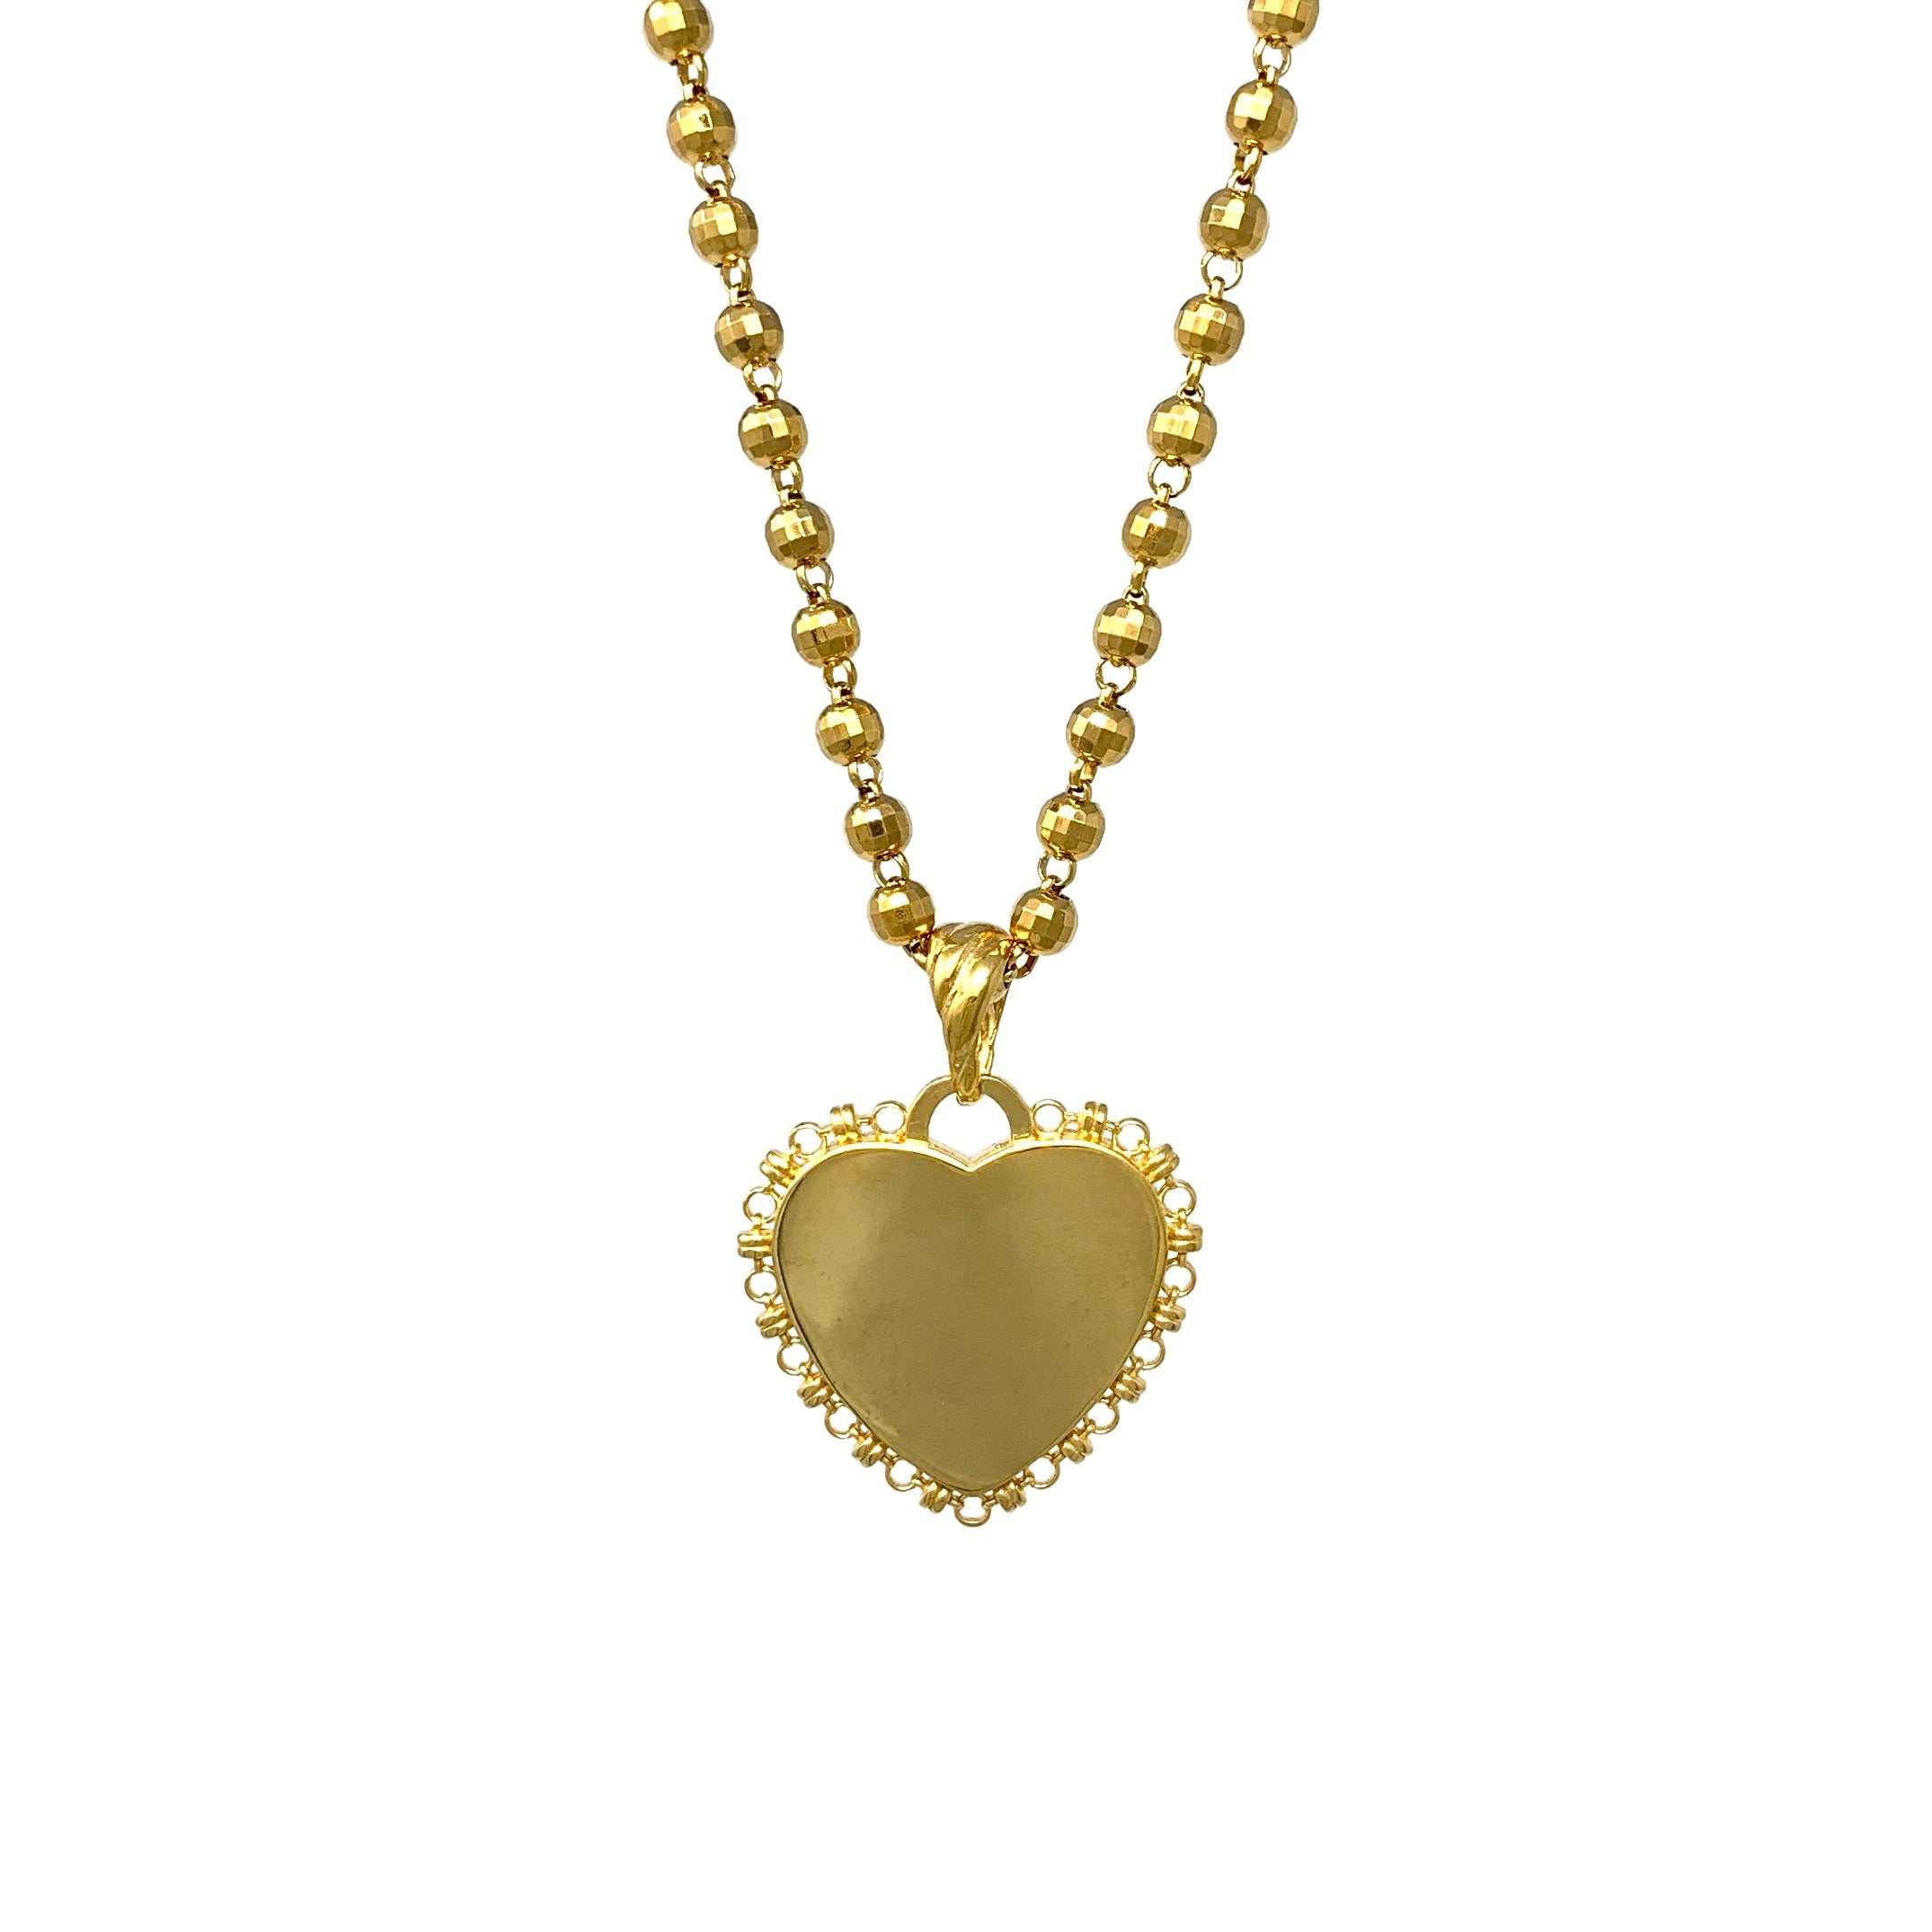 DelBrenna Heart Pendant in Gold